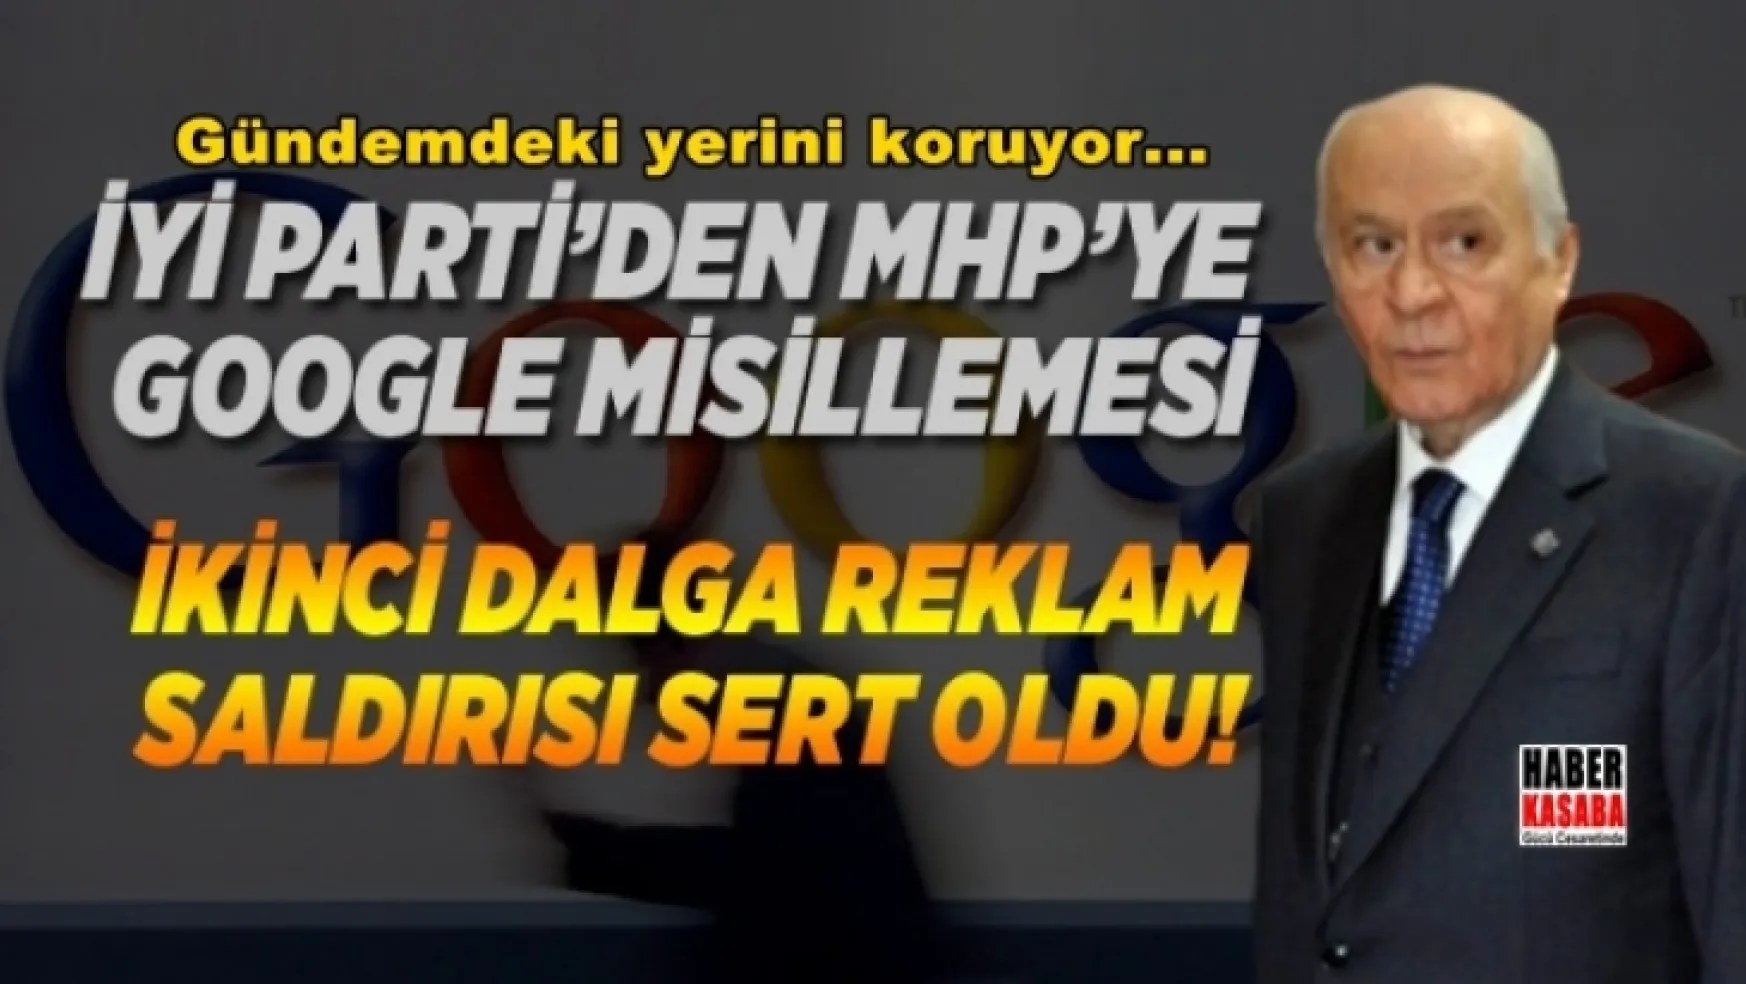 İYİ Parti'nin MHP'ye Google misillemesi